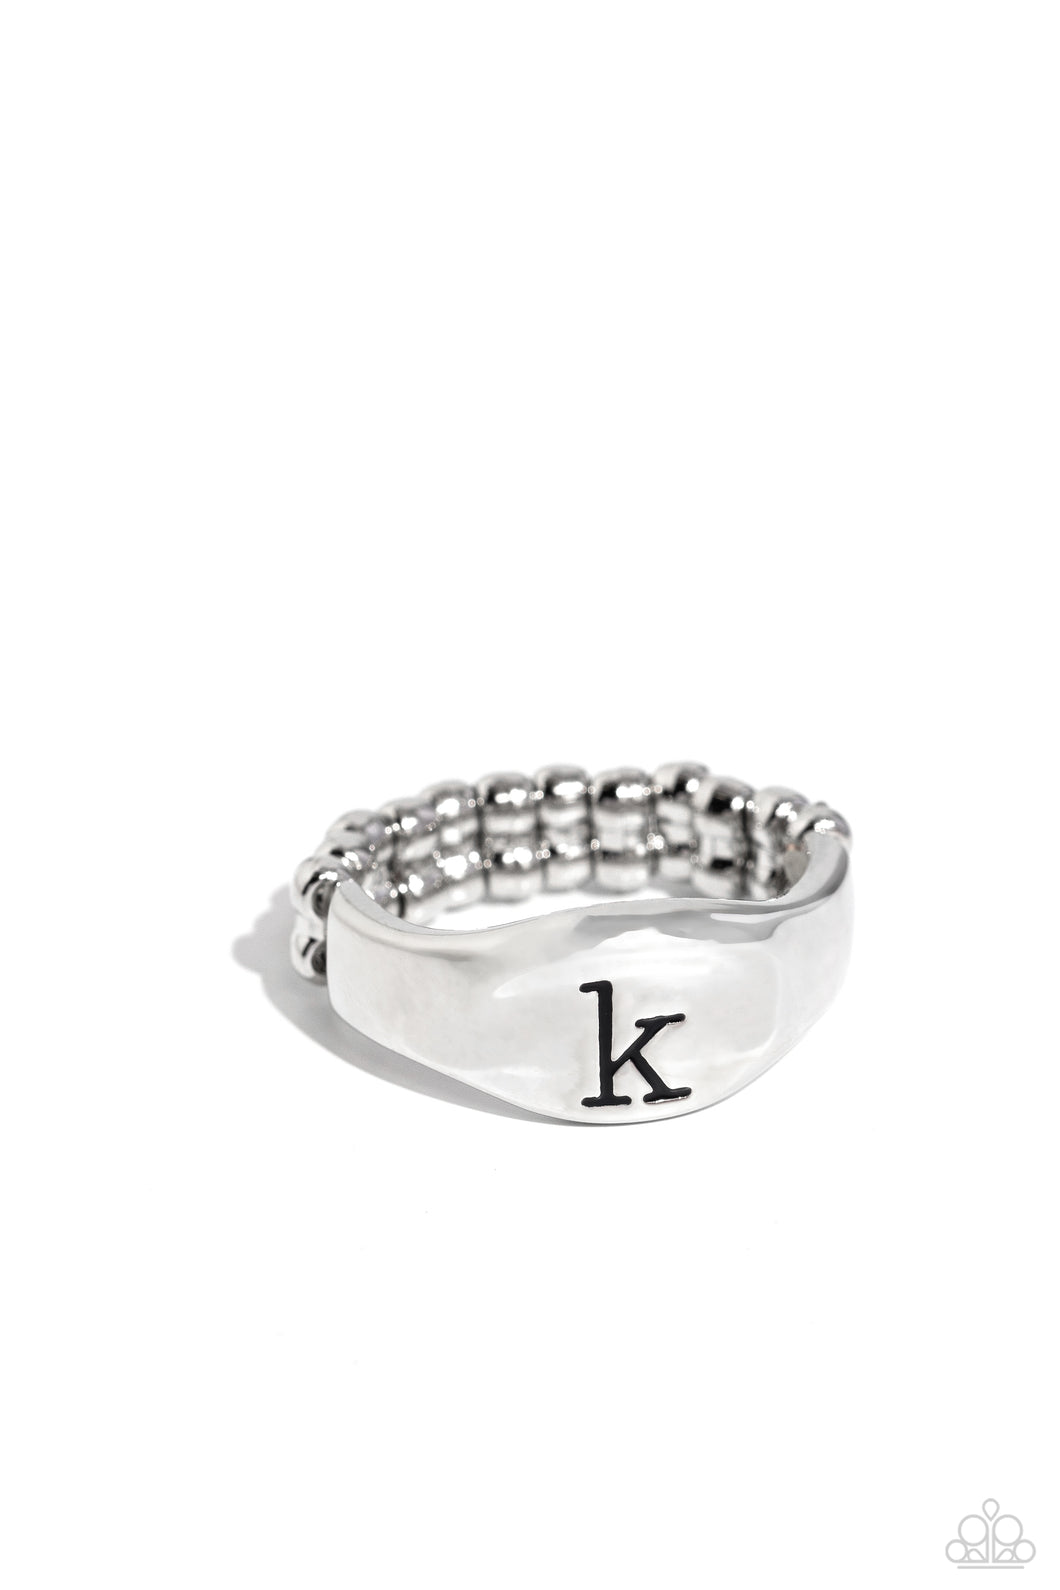 Monogram Memento - Silver - K Initial Ring